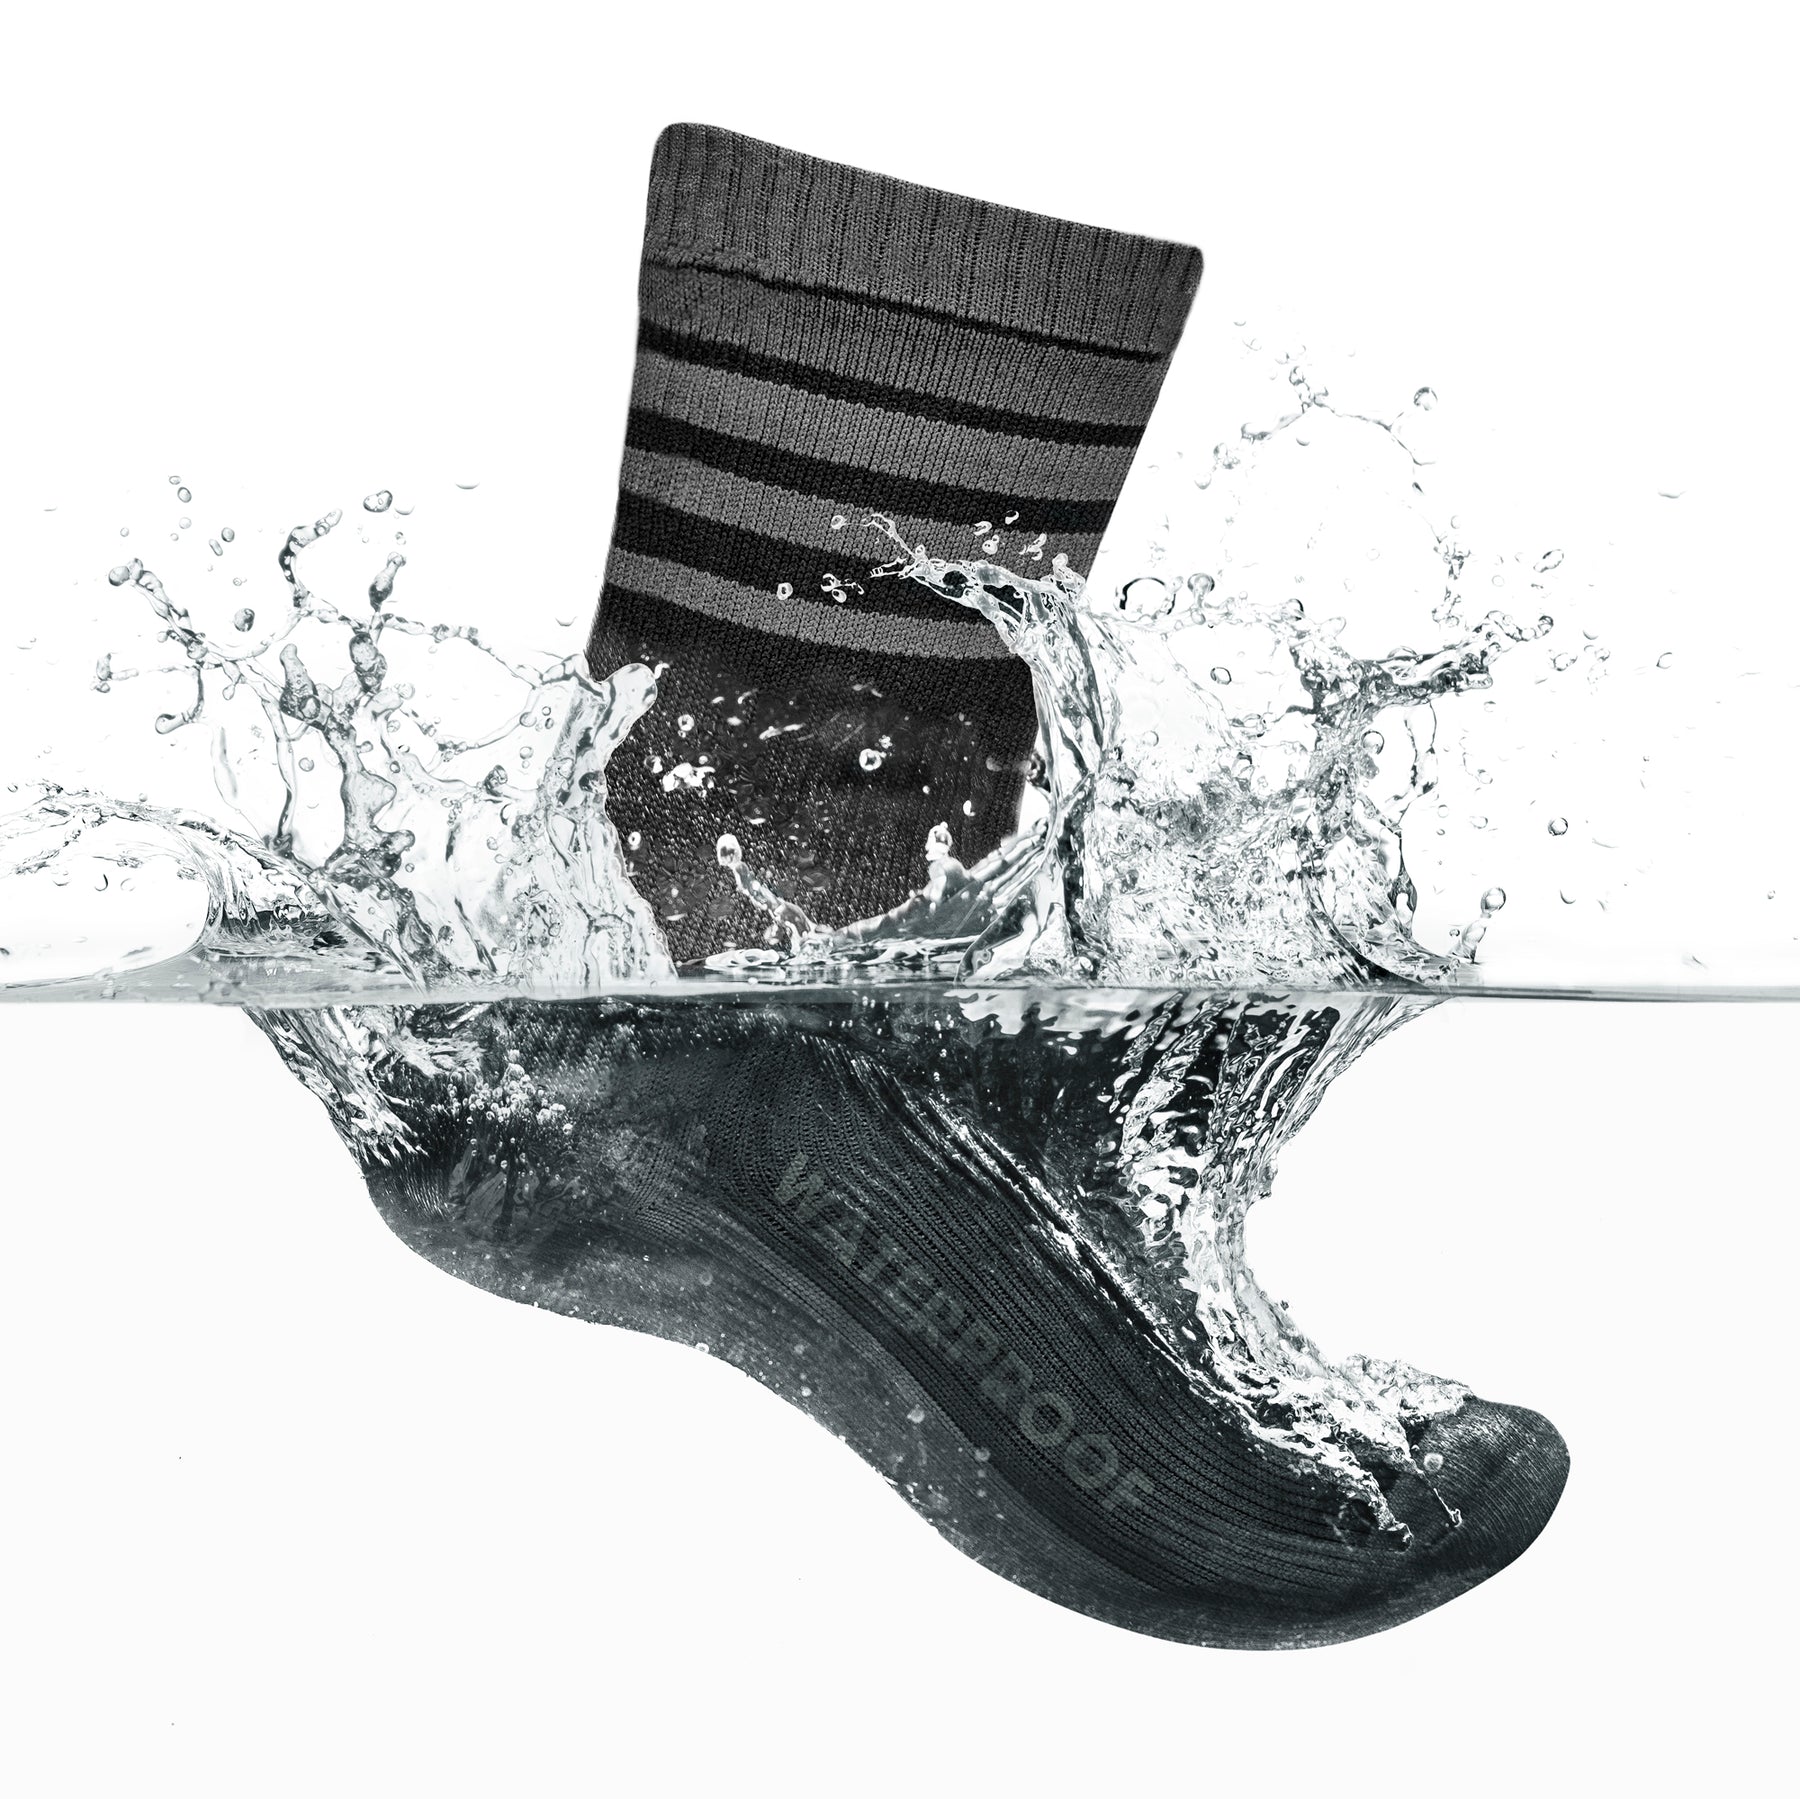 GripGrab Merino-Lined Waterproof Winter Socks